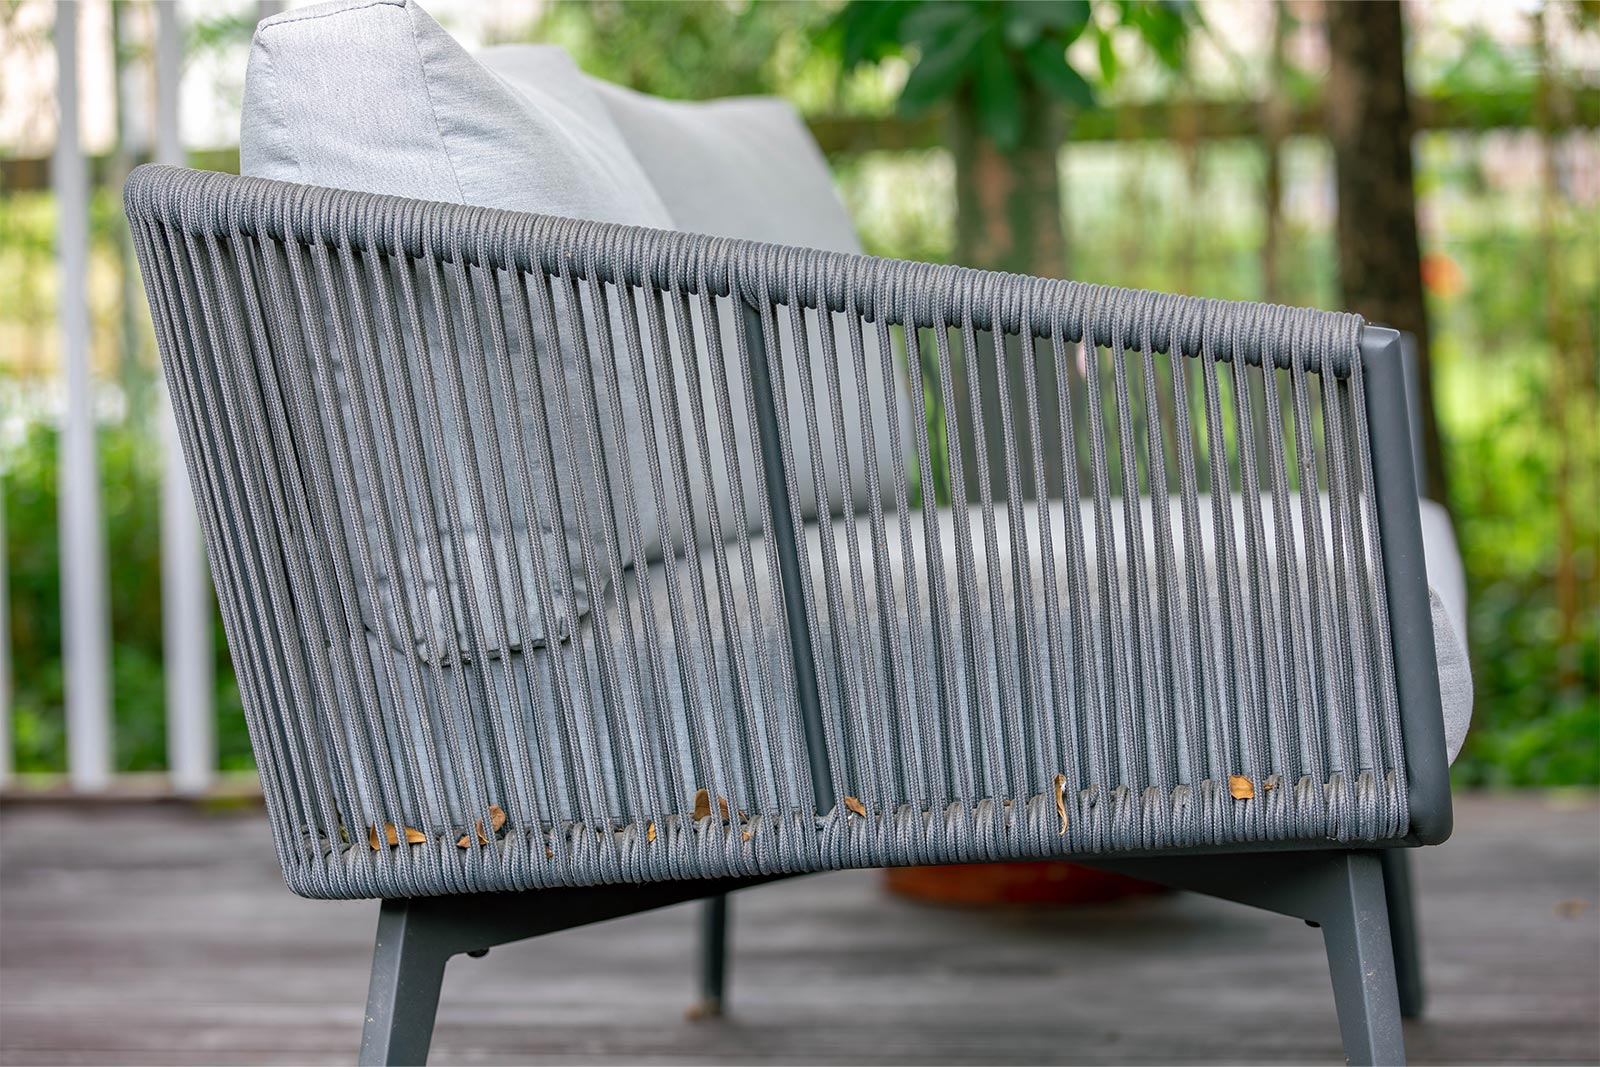 CJ-how to clean aluminum outdoor furniture (2).jpg